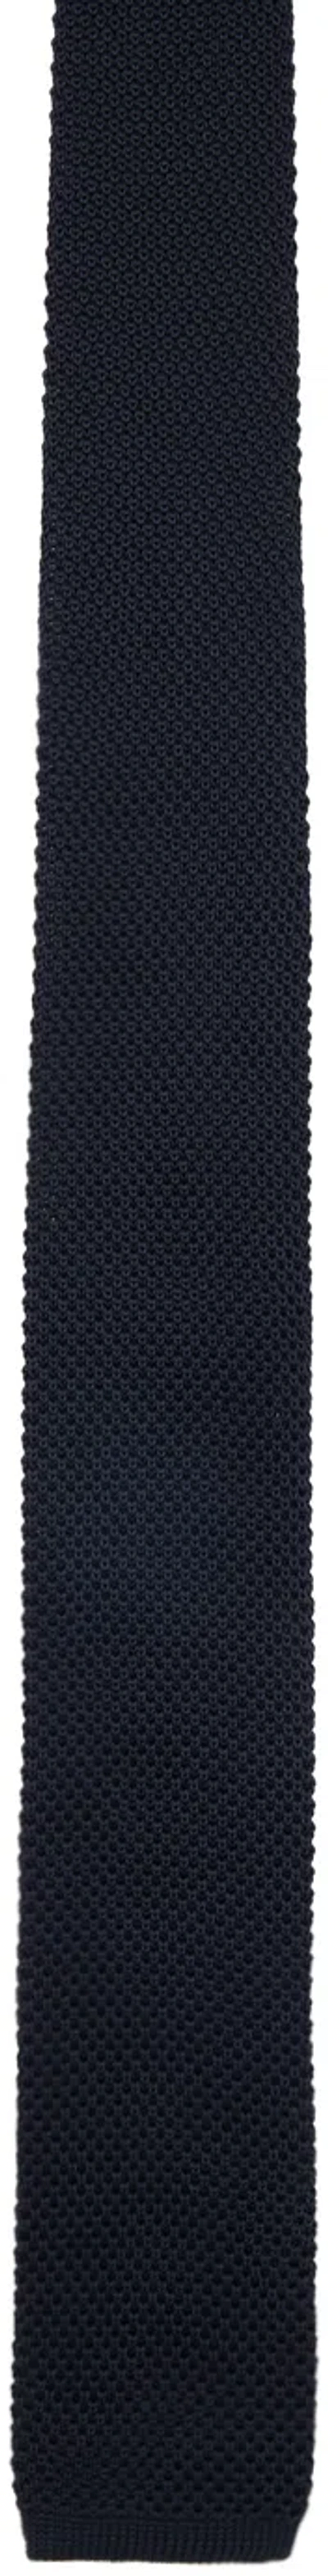 Solid Homme Navy Knit Tie In 941n Navy